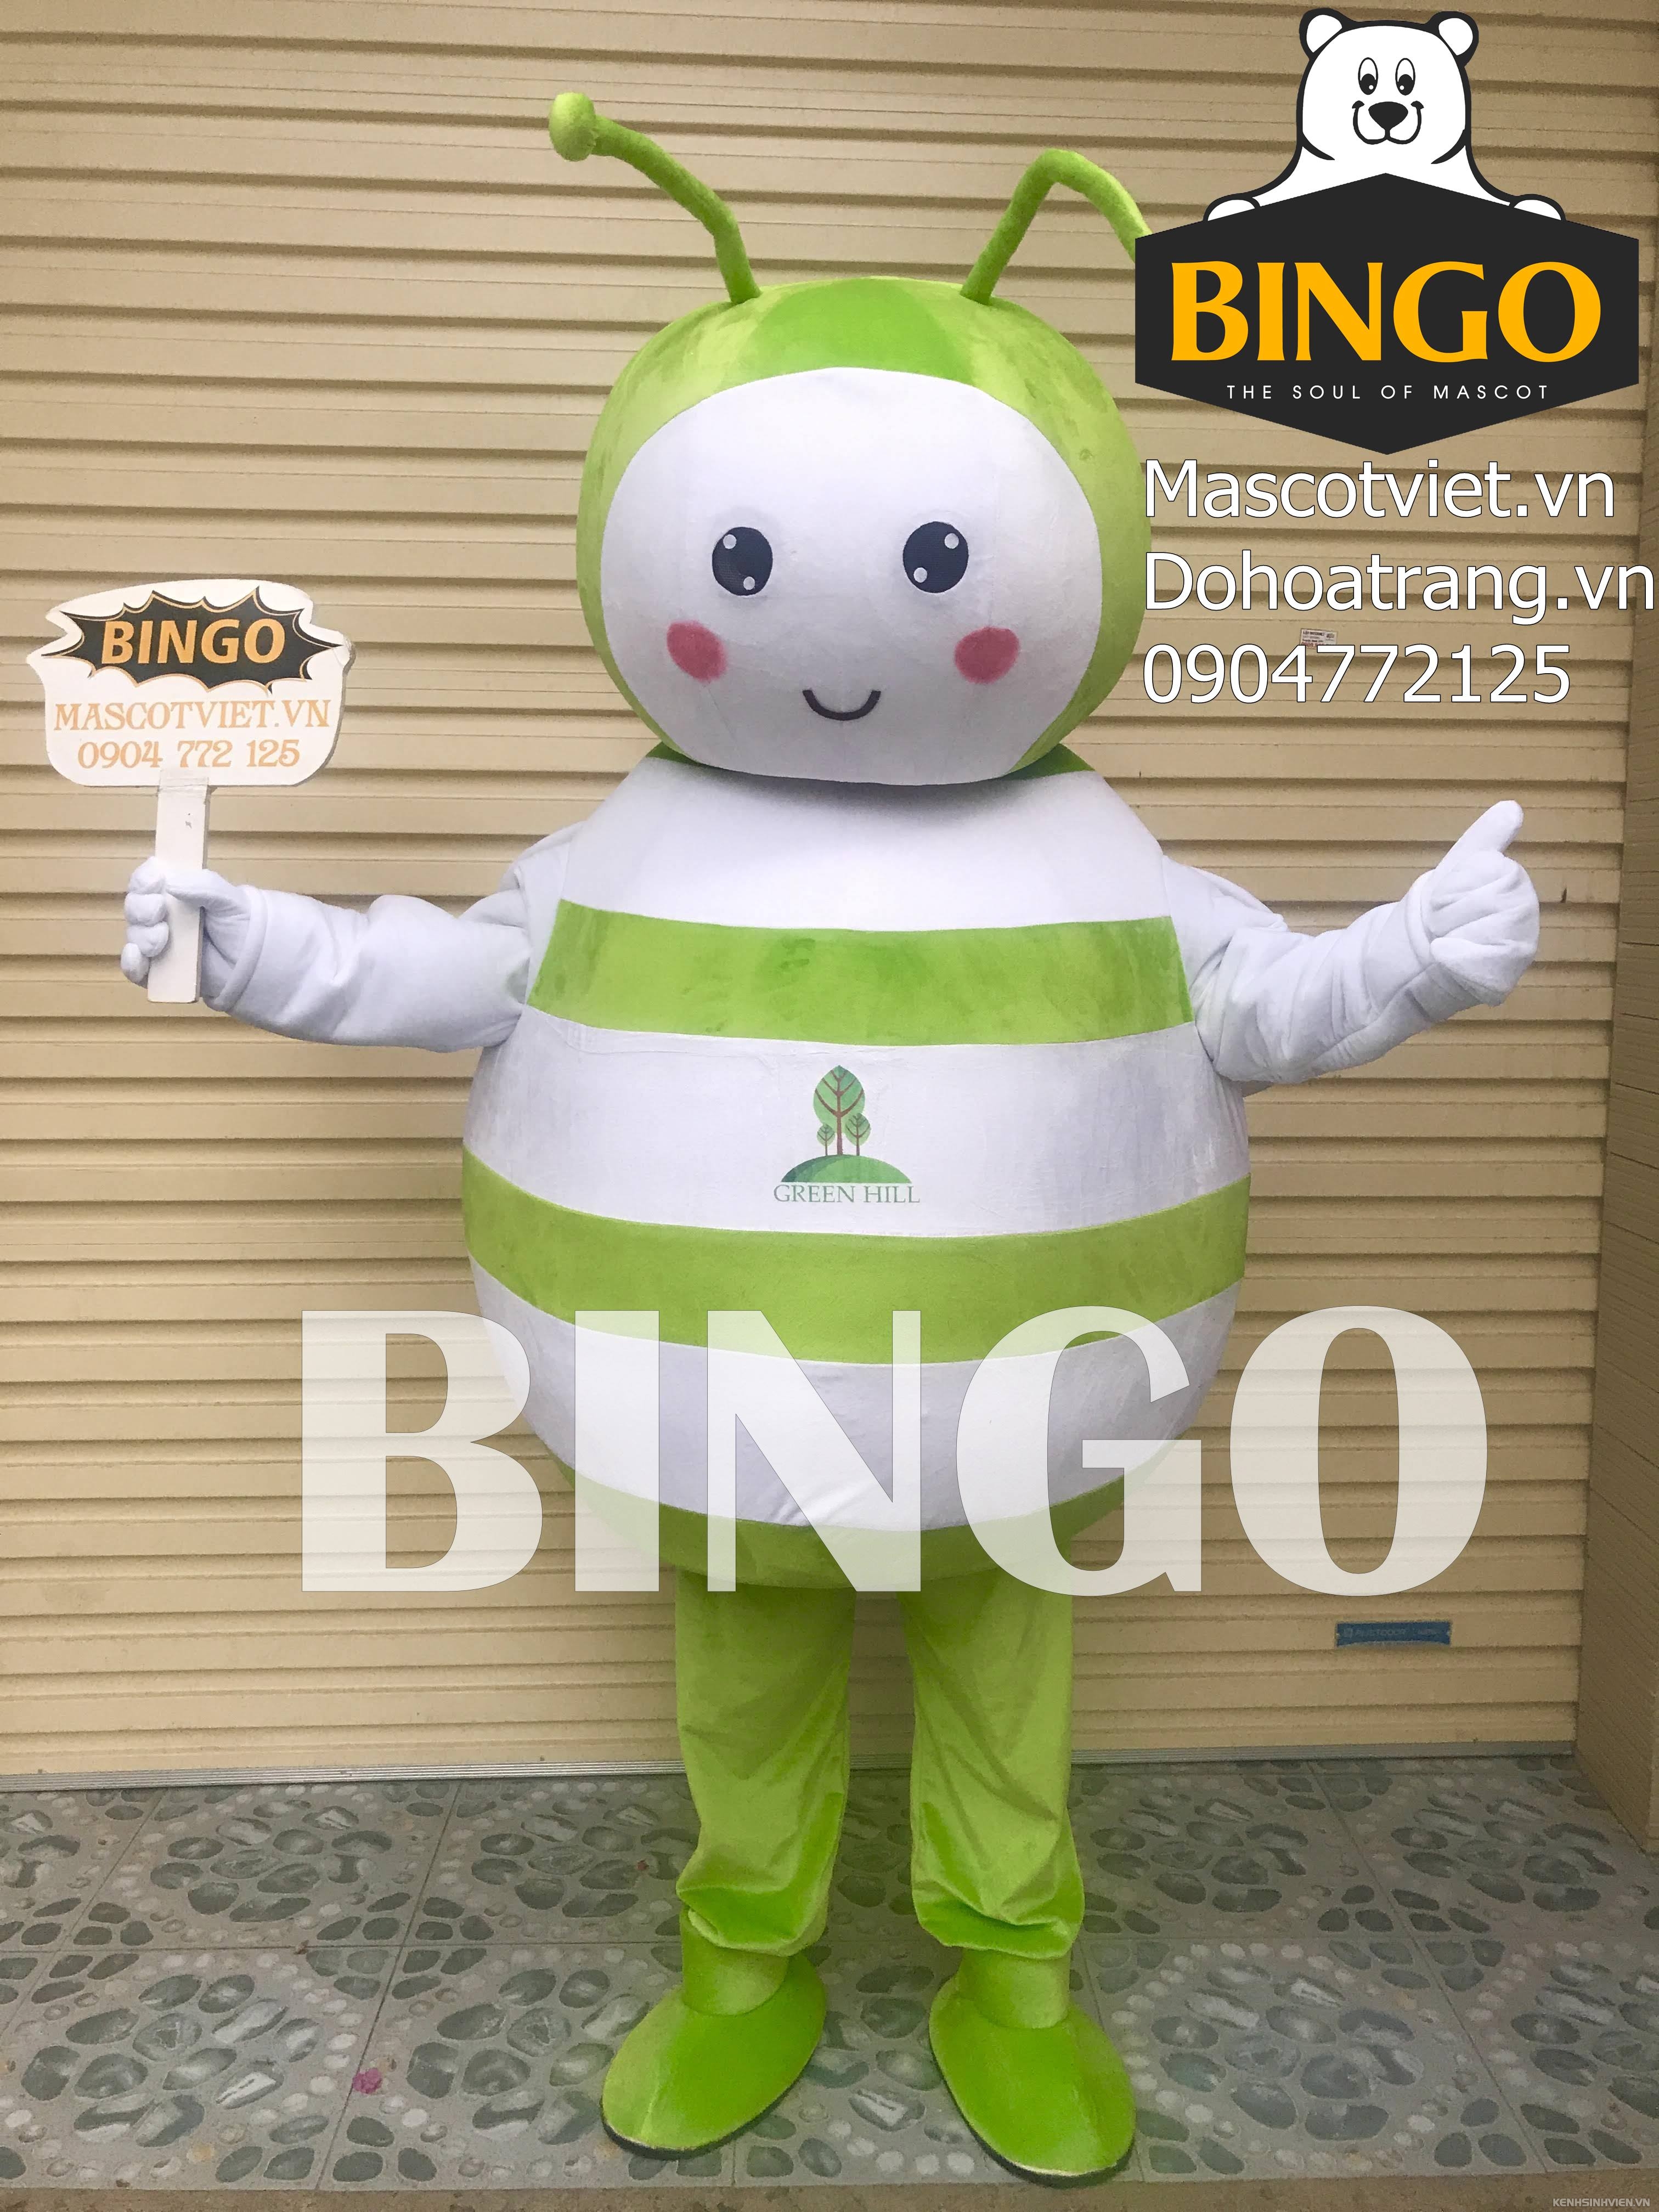 mascot-con-ong-xanh-bingo-costumes-0904772125.jpg